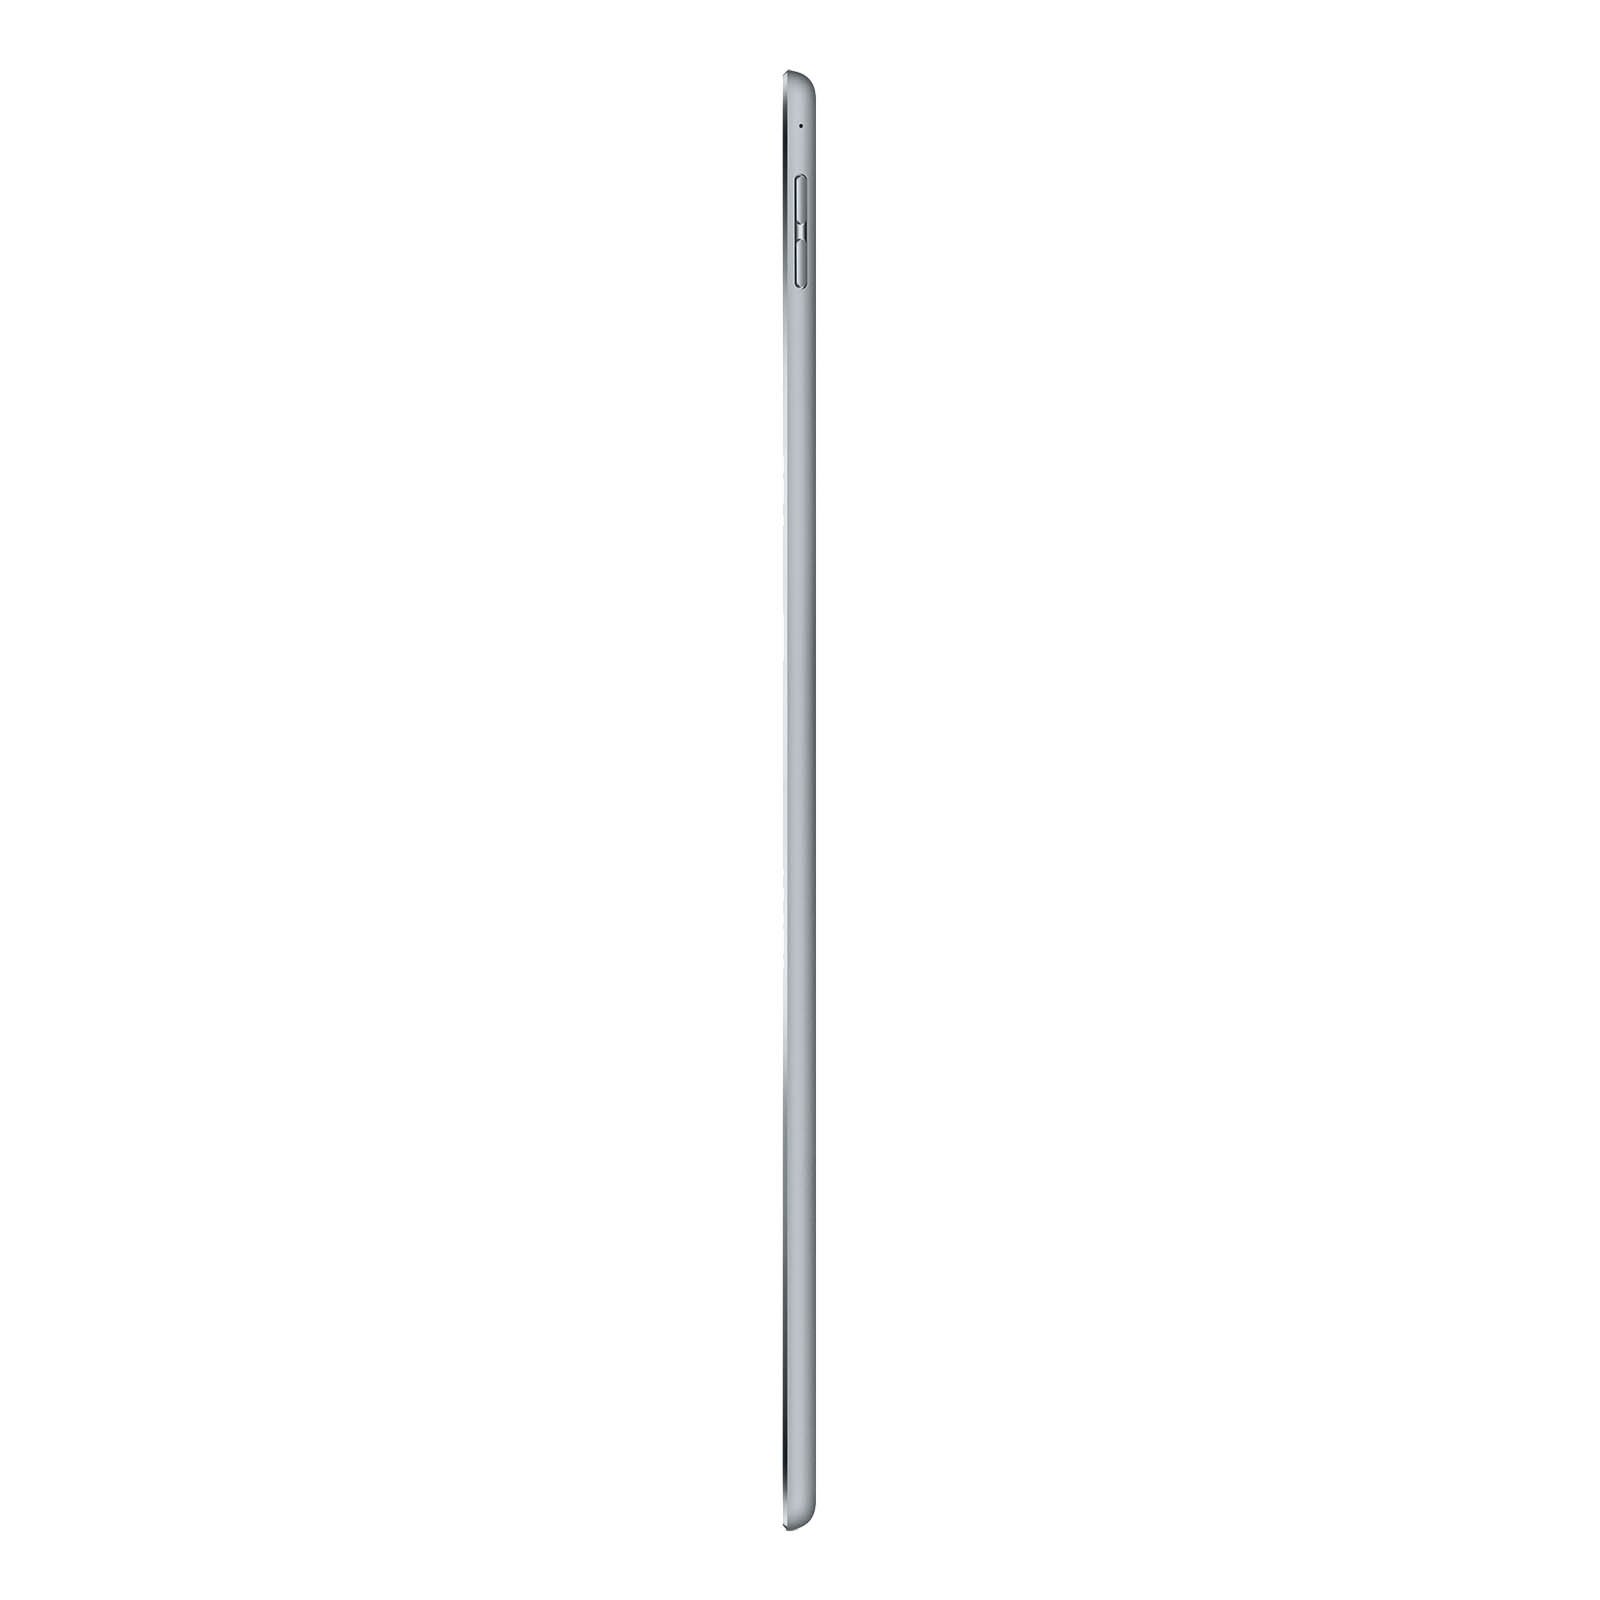 iPad Pro 12.9 Inch 1st Gen 128GB Space Grey Pristine - Unlocked